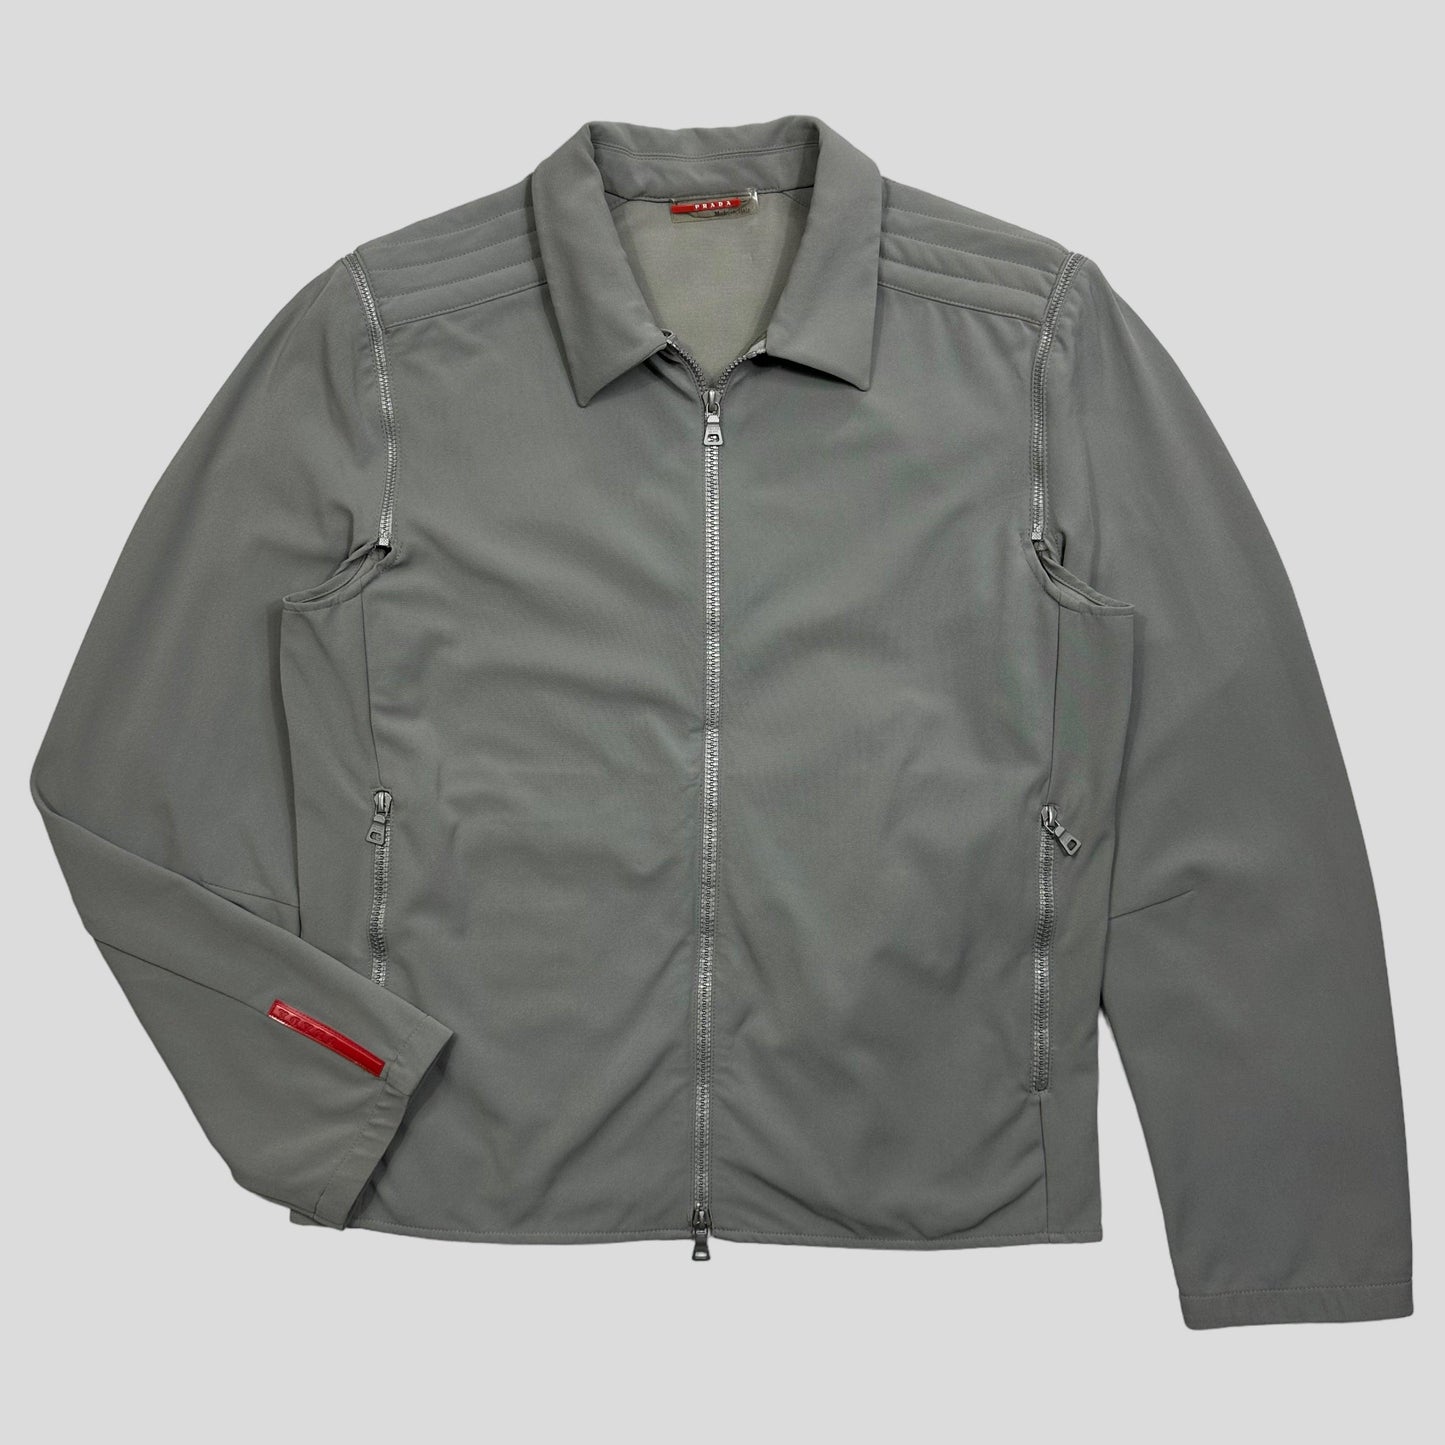 Prada Sport SS00 Modular Soft Nylon Technical Jacket / Vest - M/L - Known Source